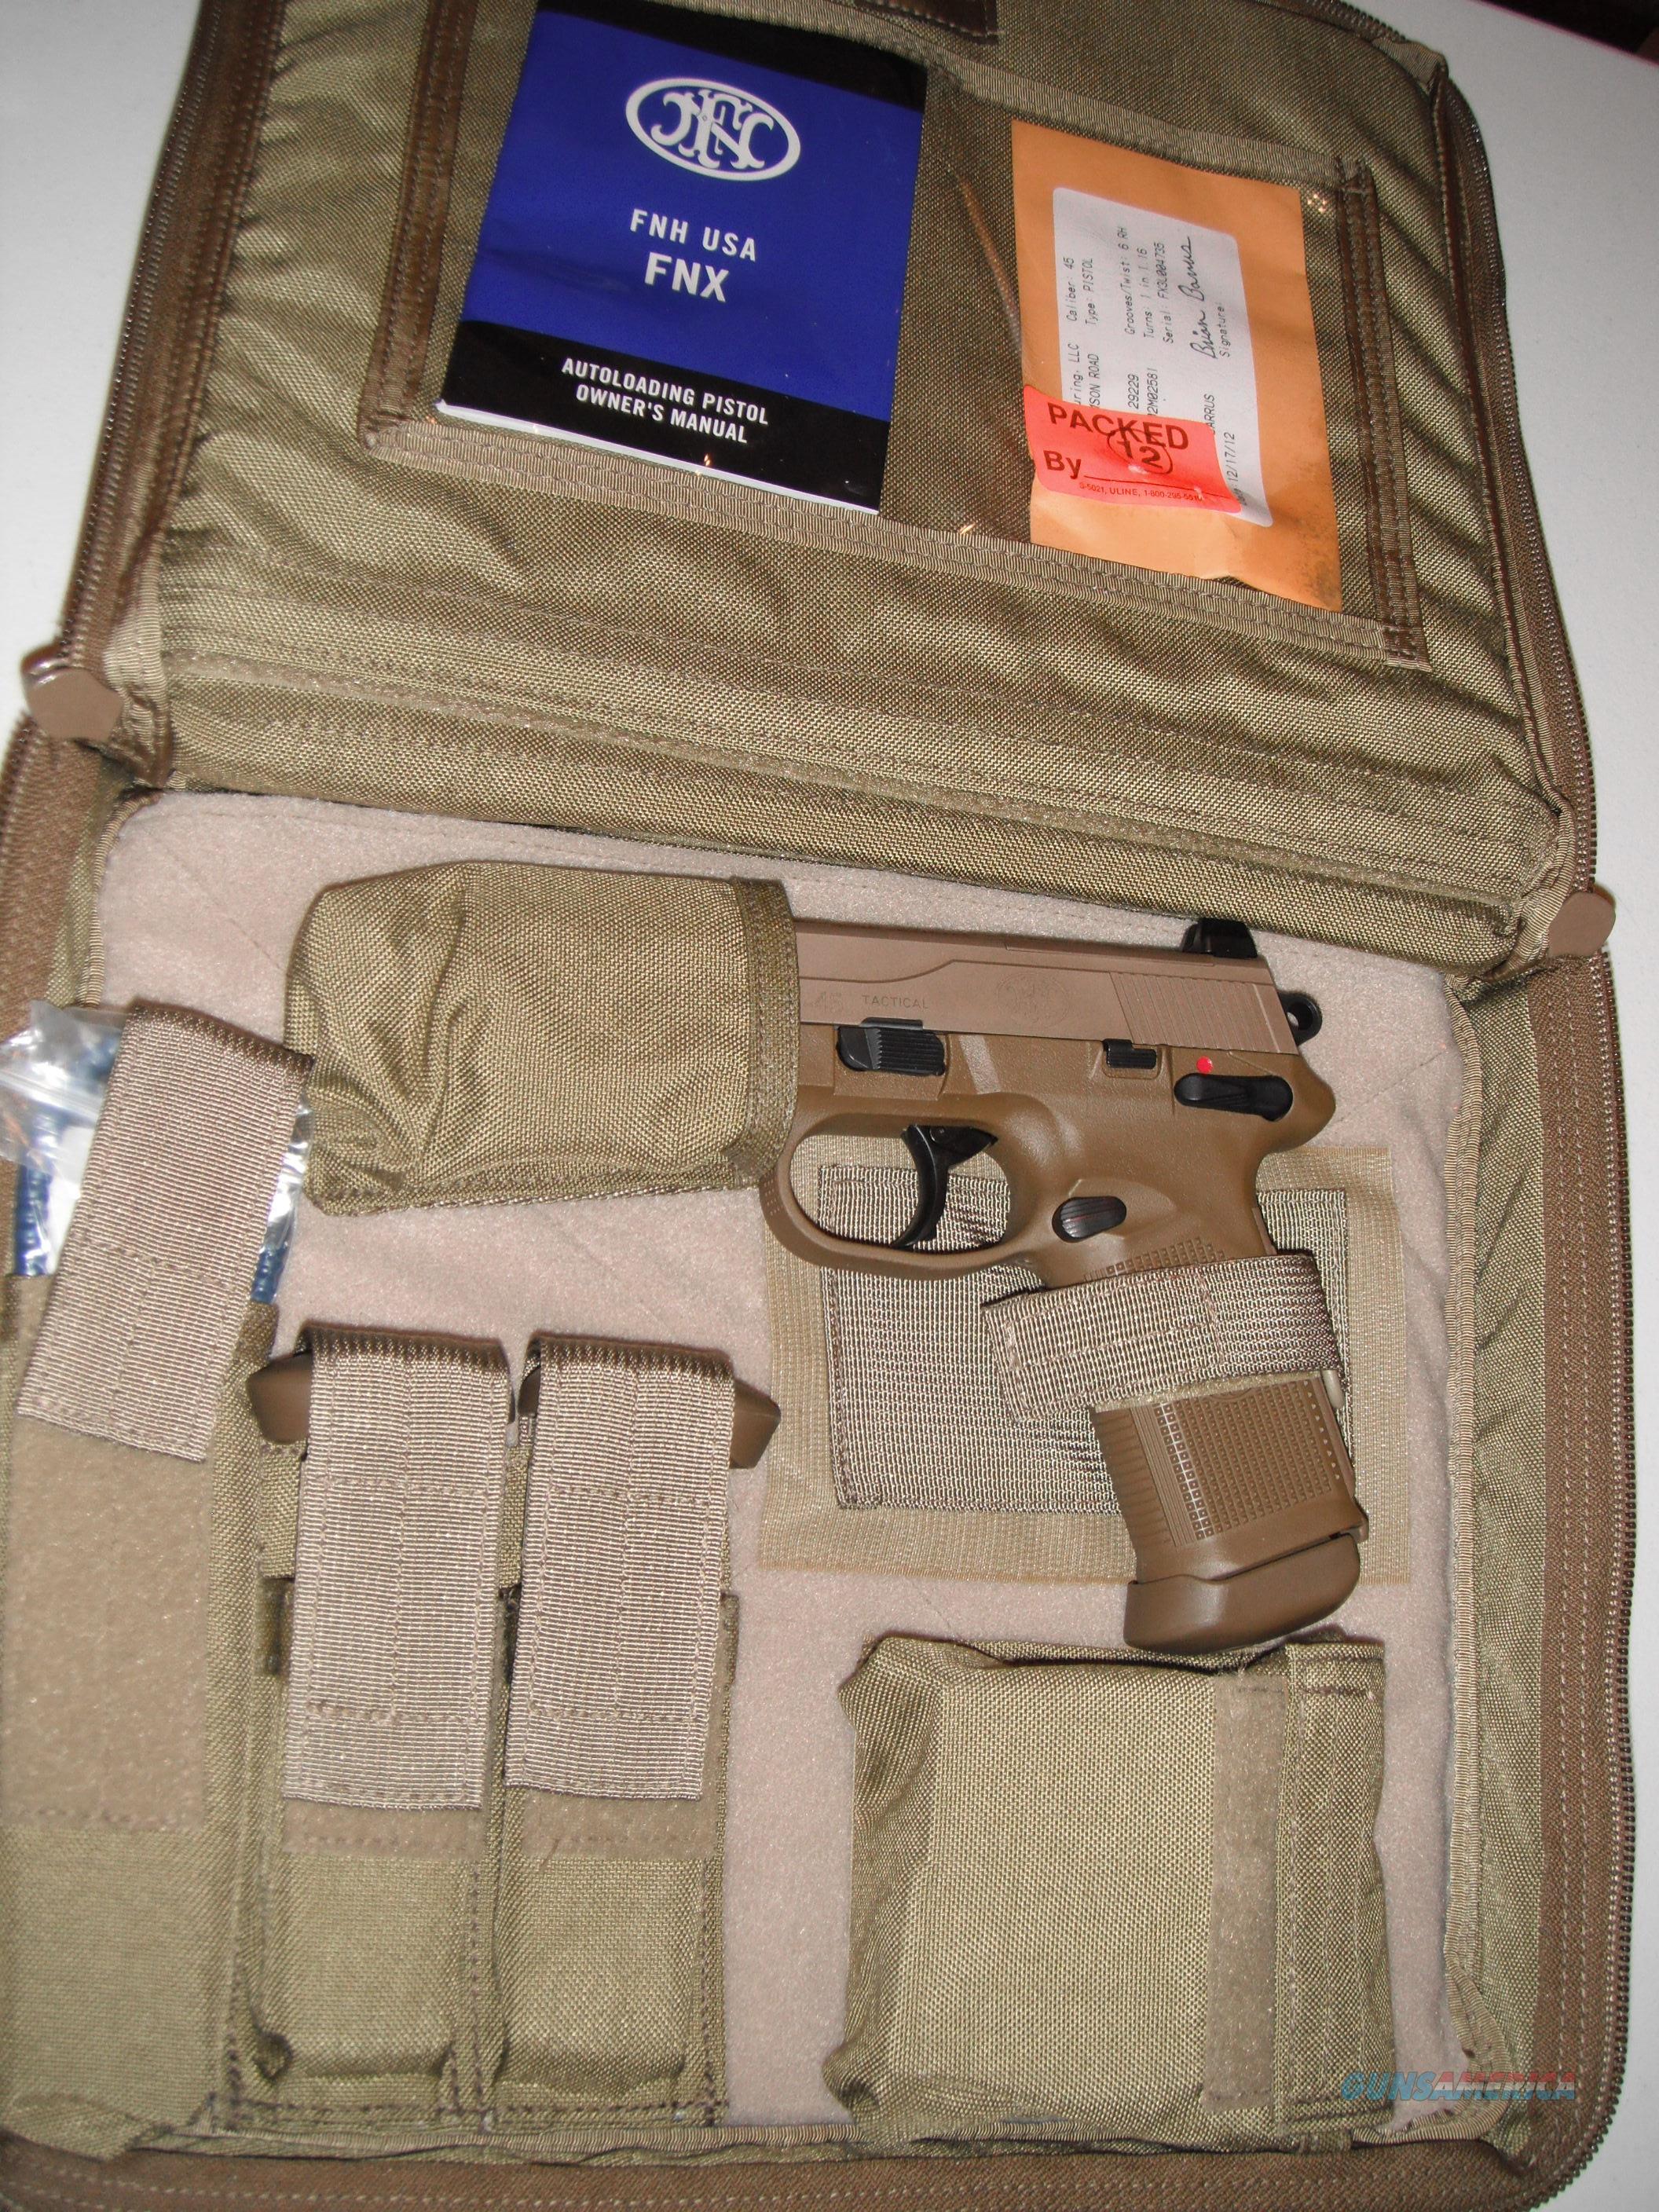 FNX-45 Tactical pistol 45acp NIB for sale at Gunsamerica.com: 969538127